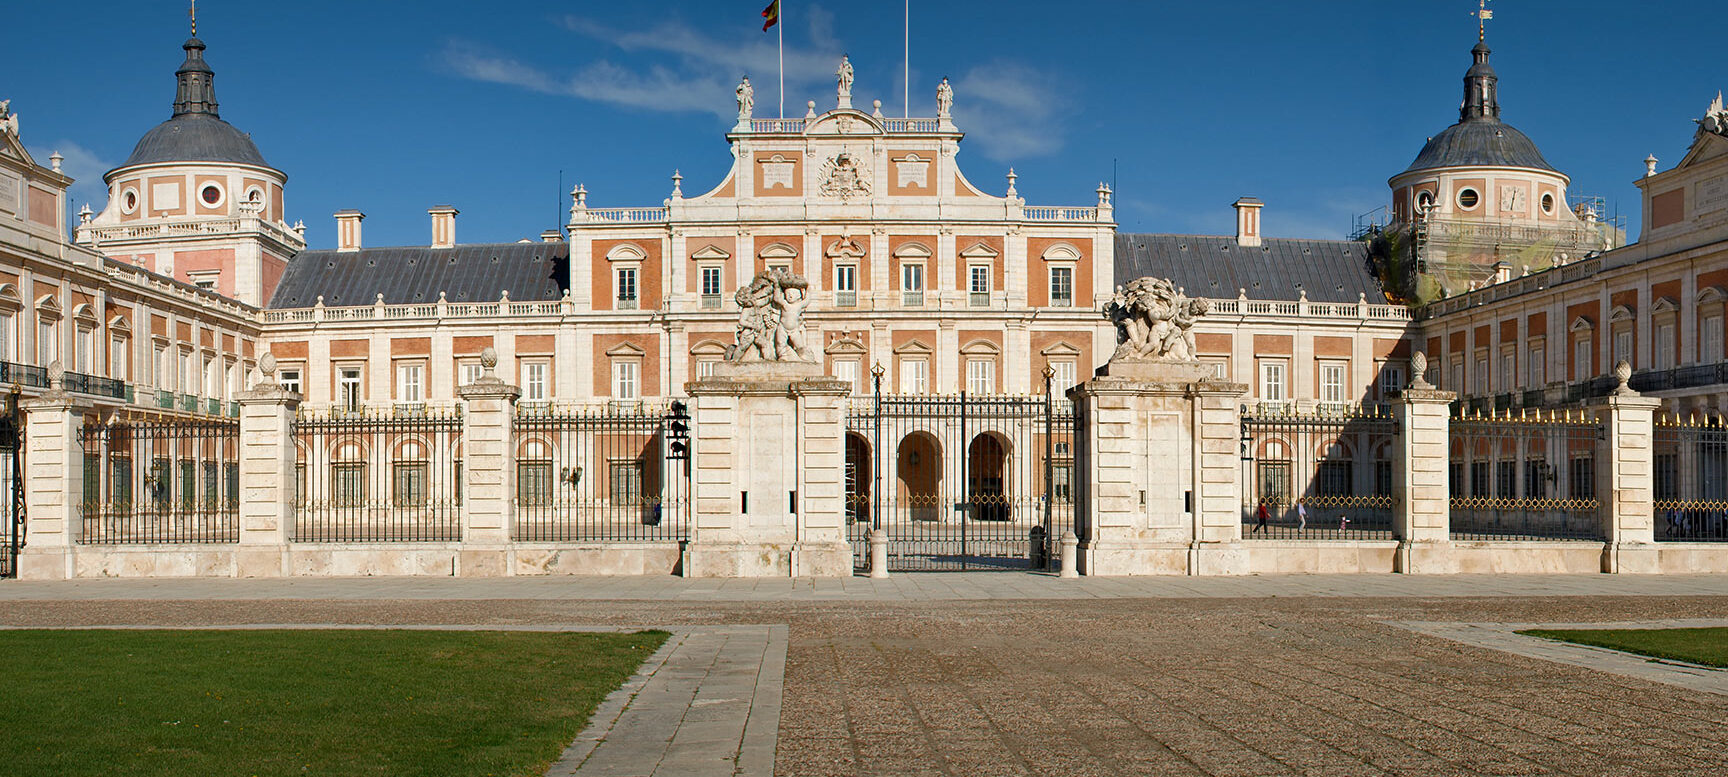 PALACIO REAL DE ARANJUEZ		Aranjuez	Madrid	Museo